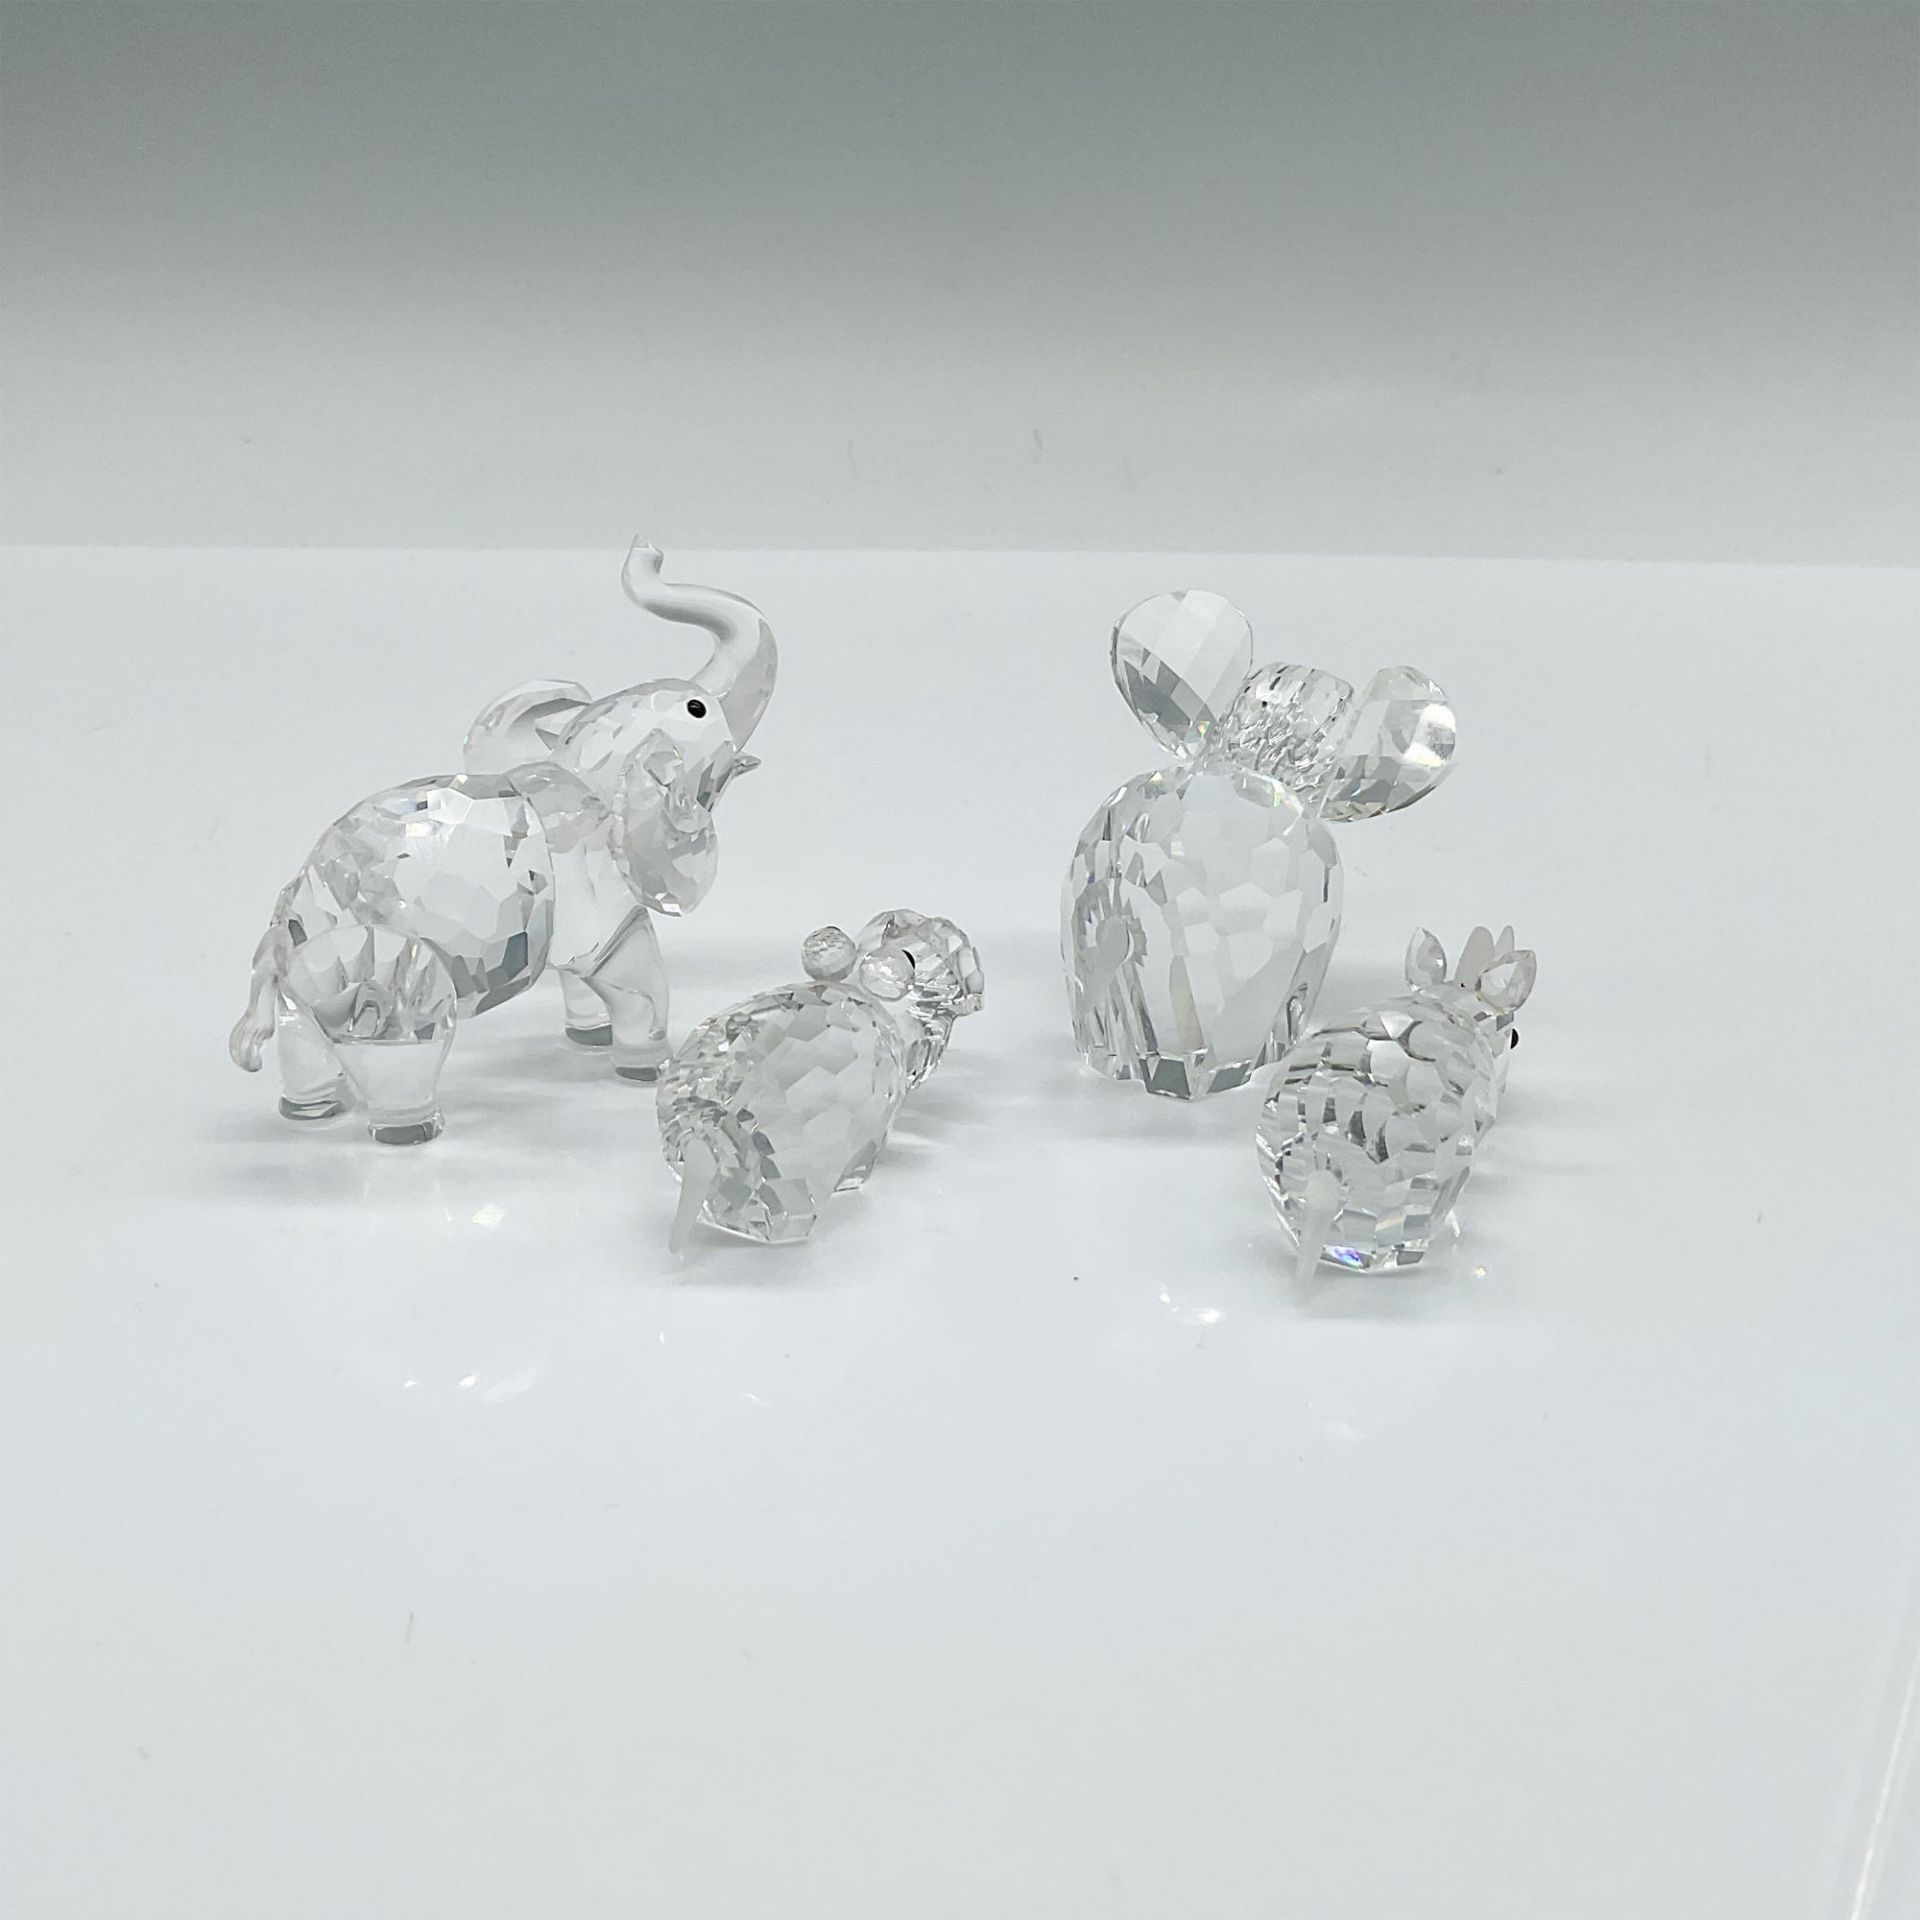 4pc Swarovski Crystal African Animal Figurines - Image 2 of 3